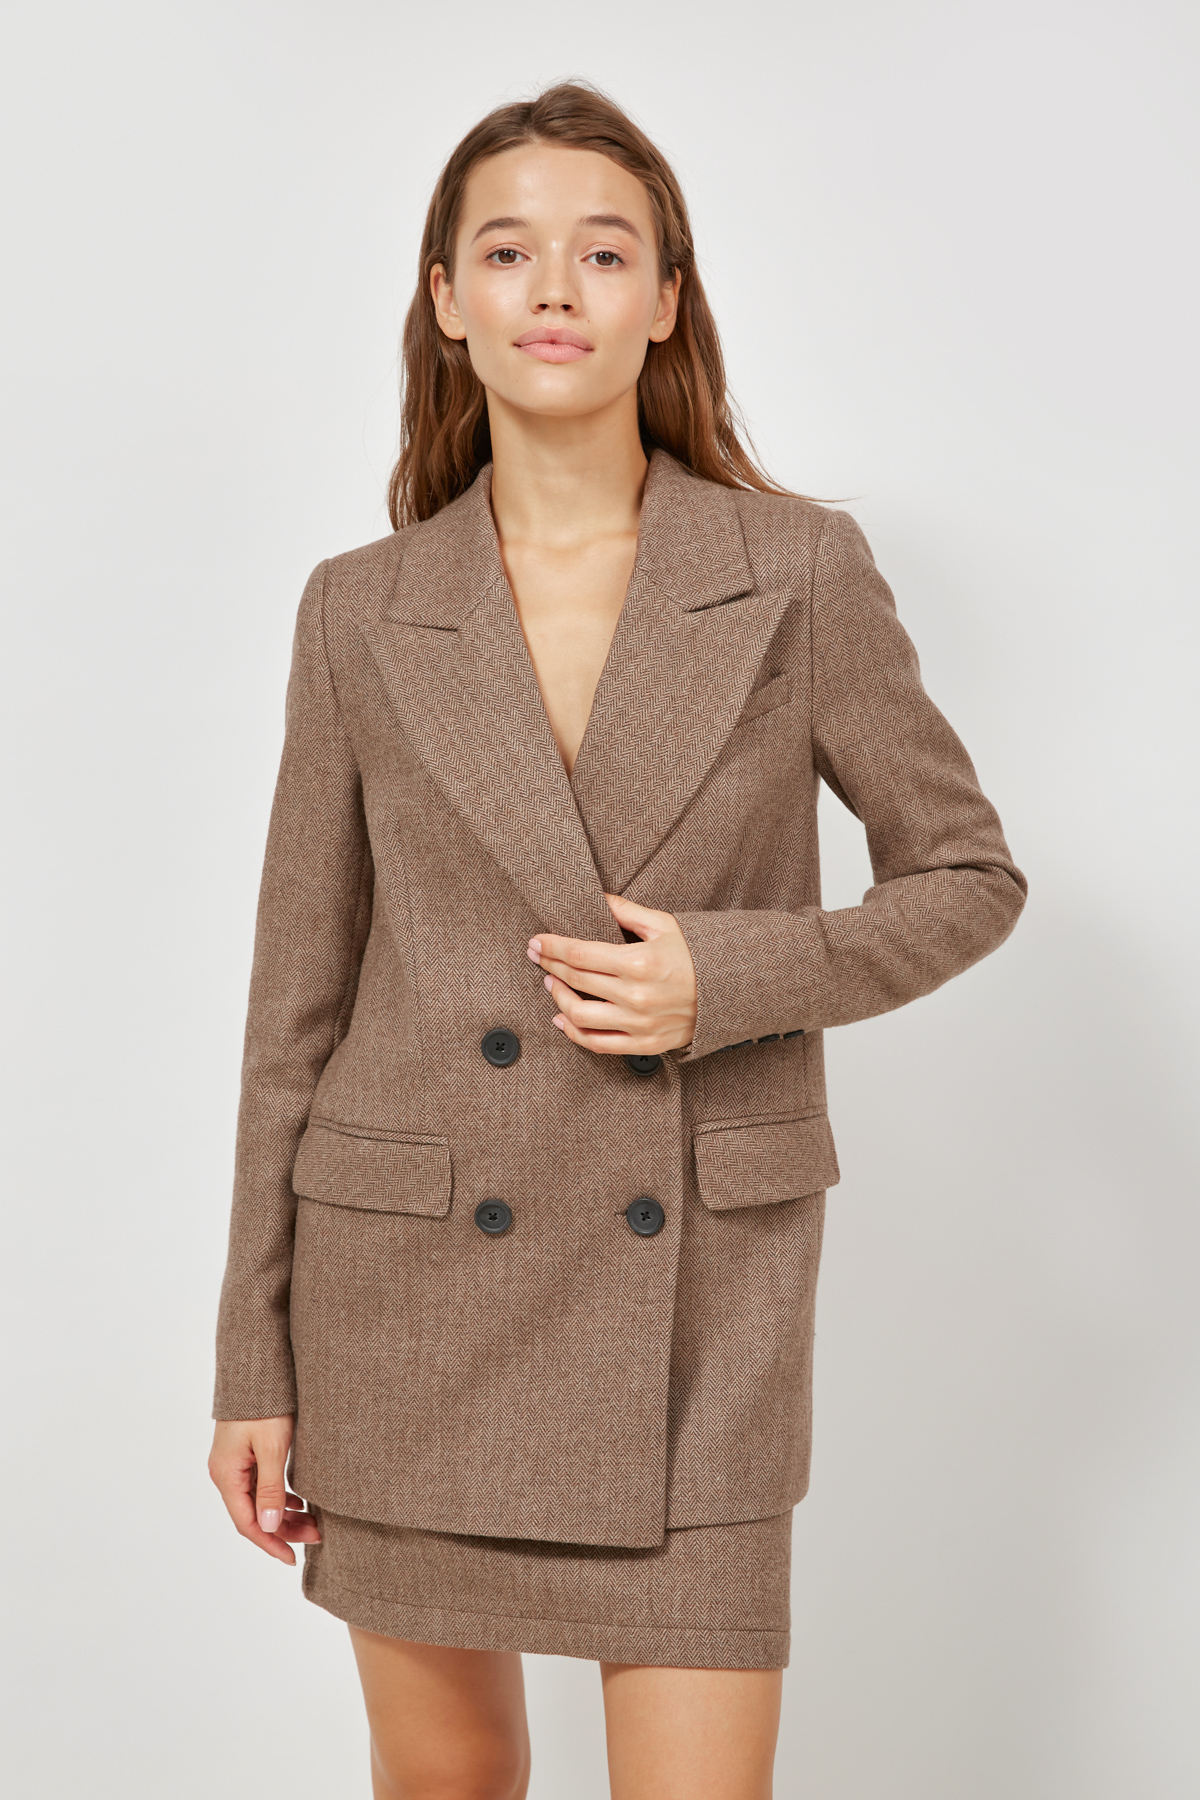 Double-breasted jacket with wool in brown herringbone print, photo 1